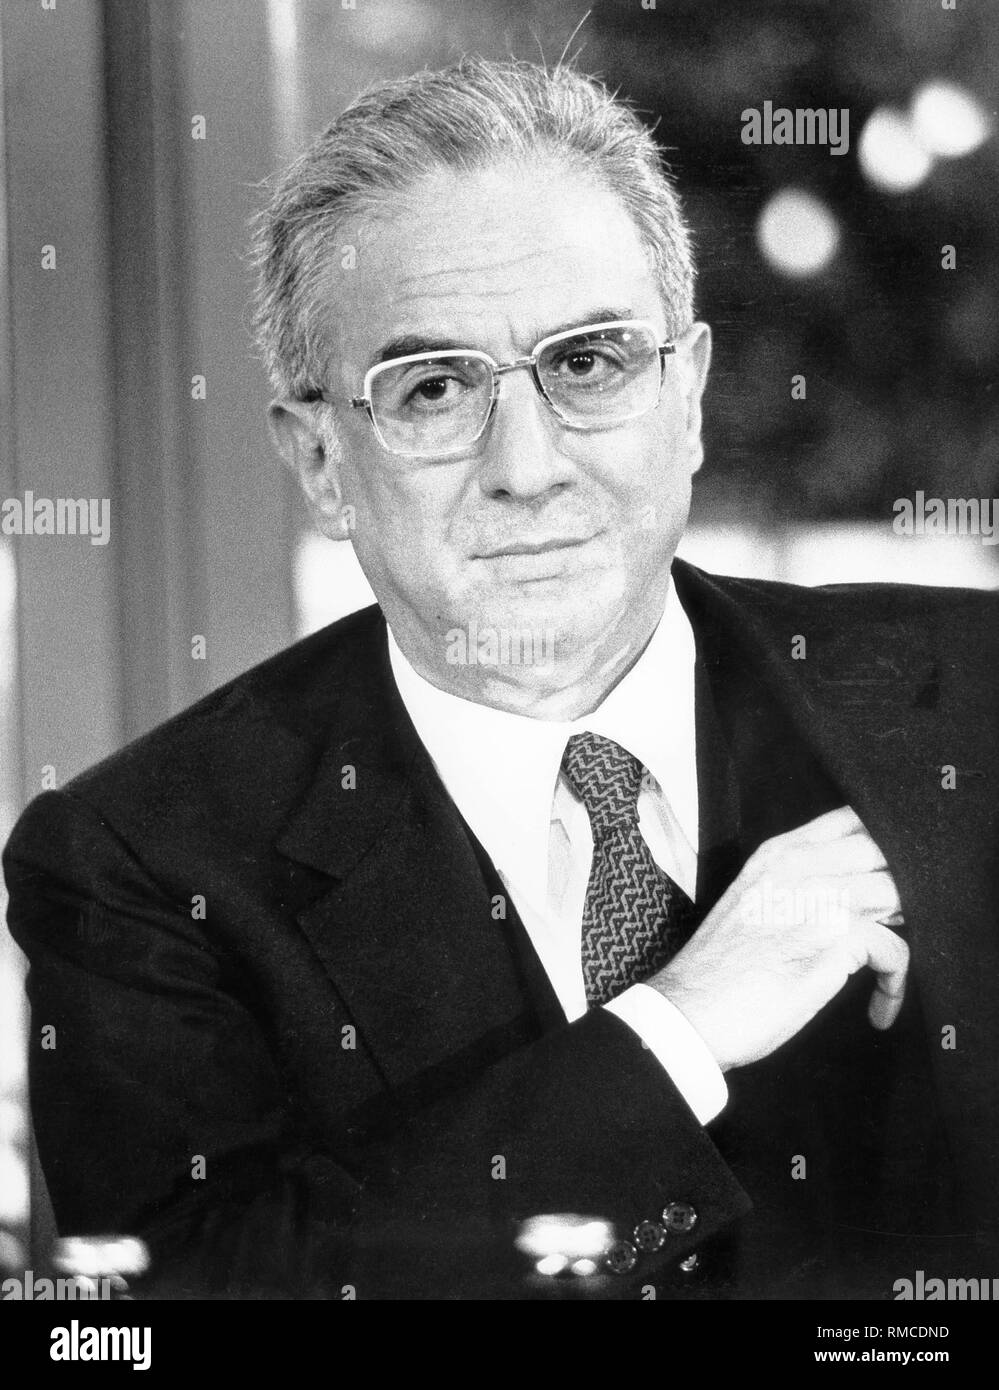 Francesco Cossiga, an Italian President. Stock Photo